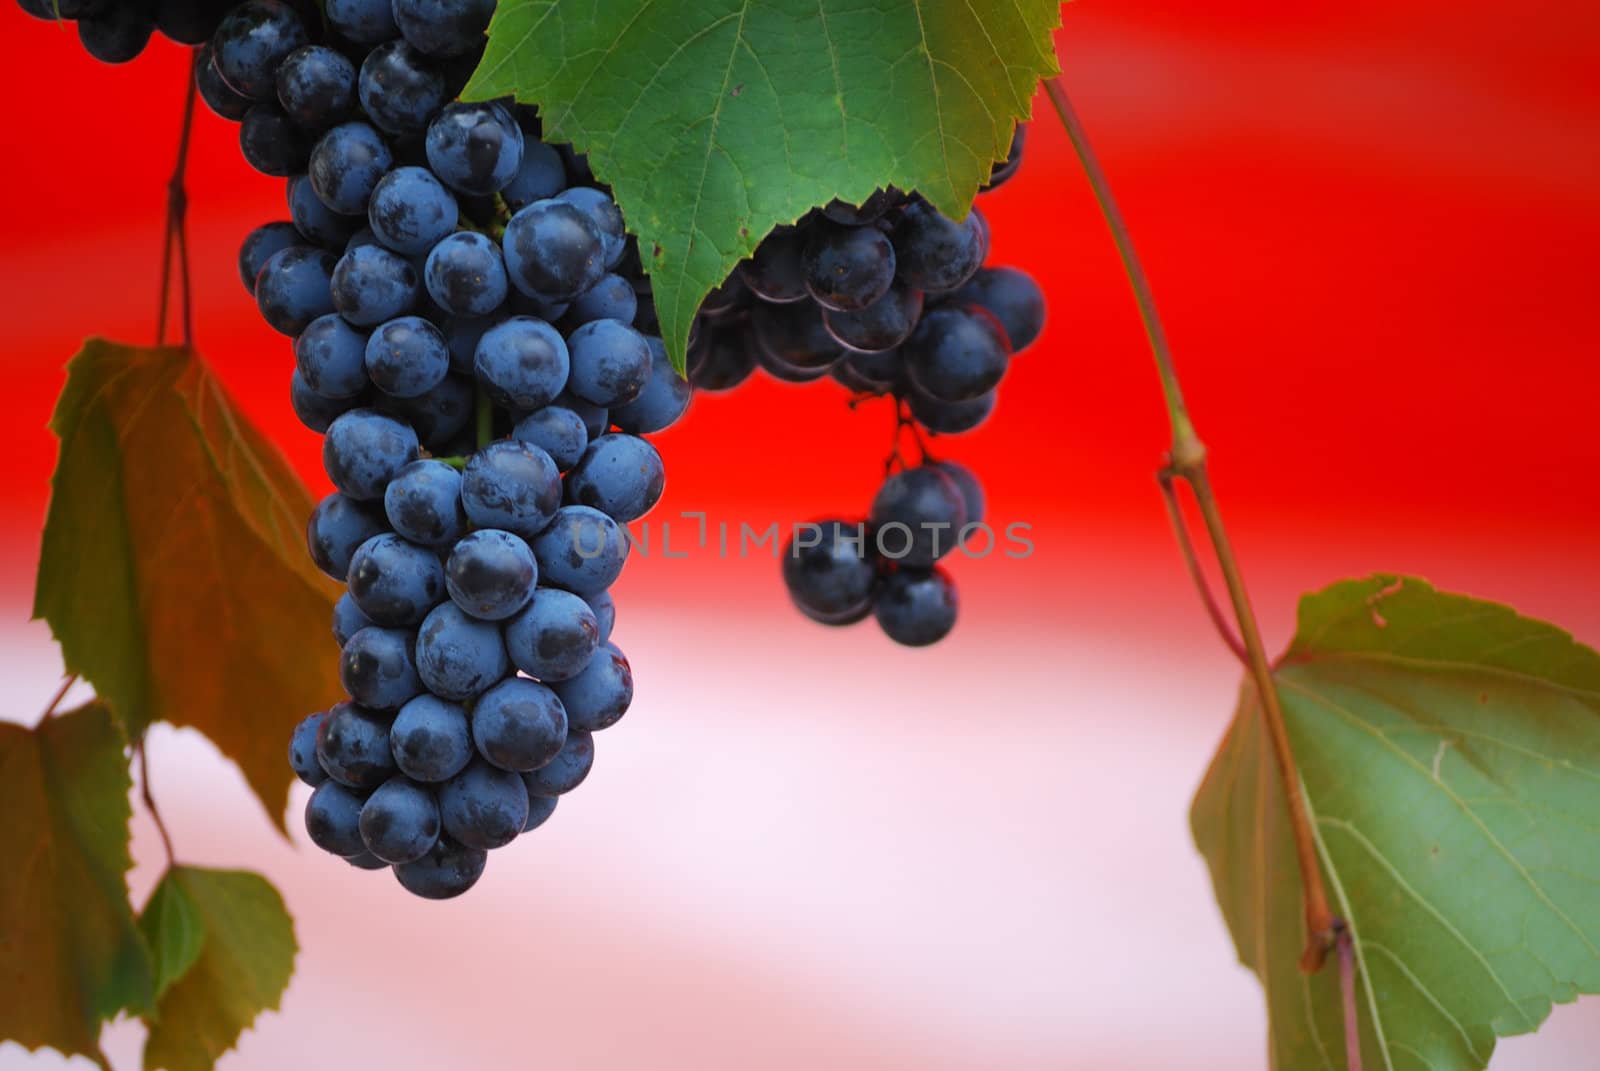 Wine grapes by zagart36